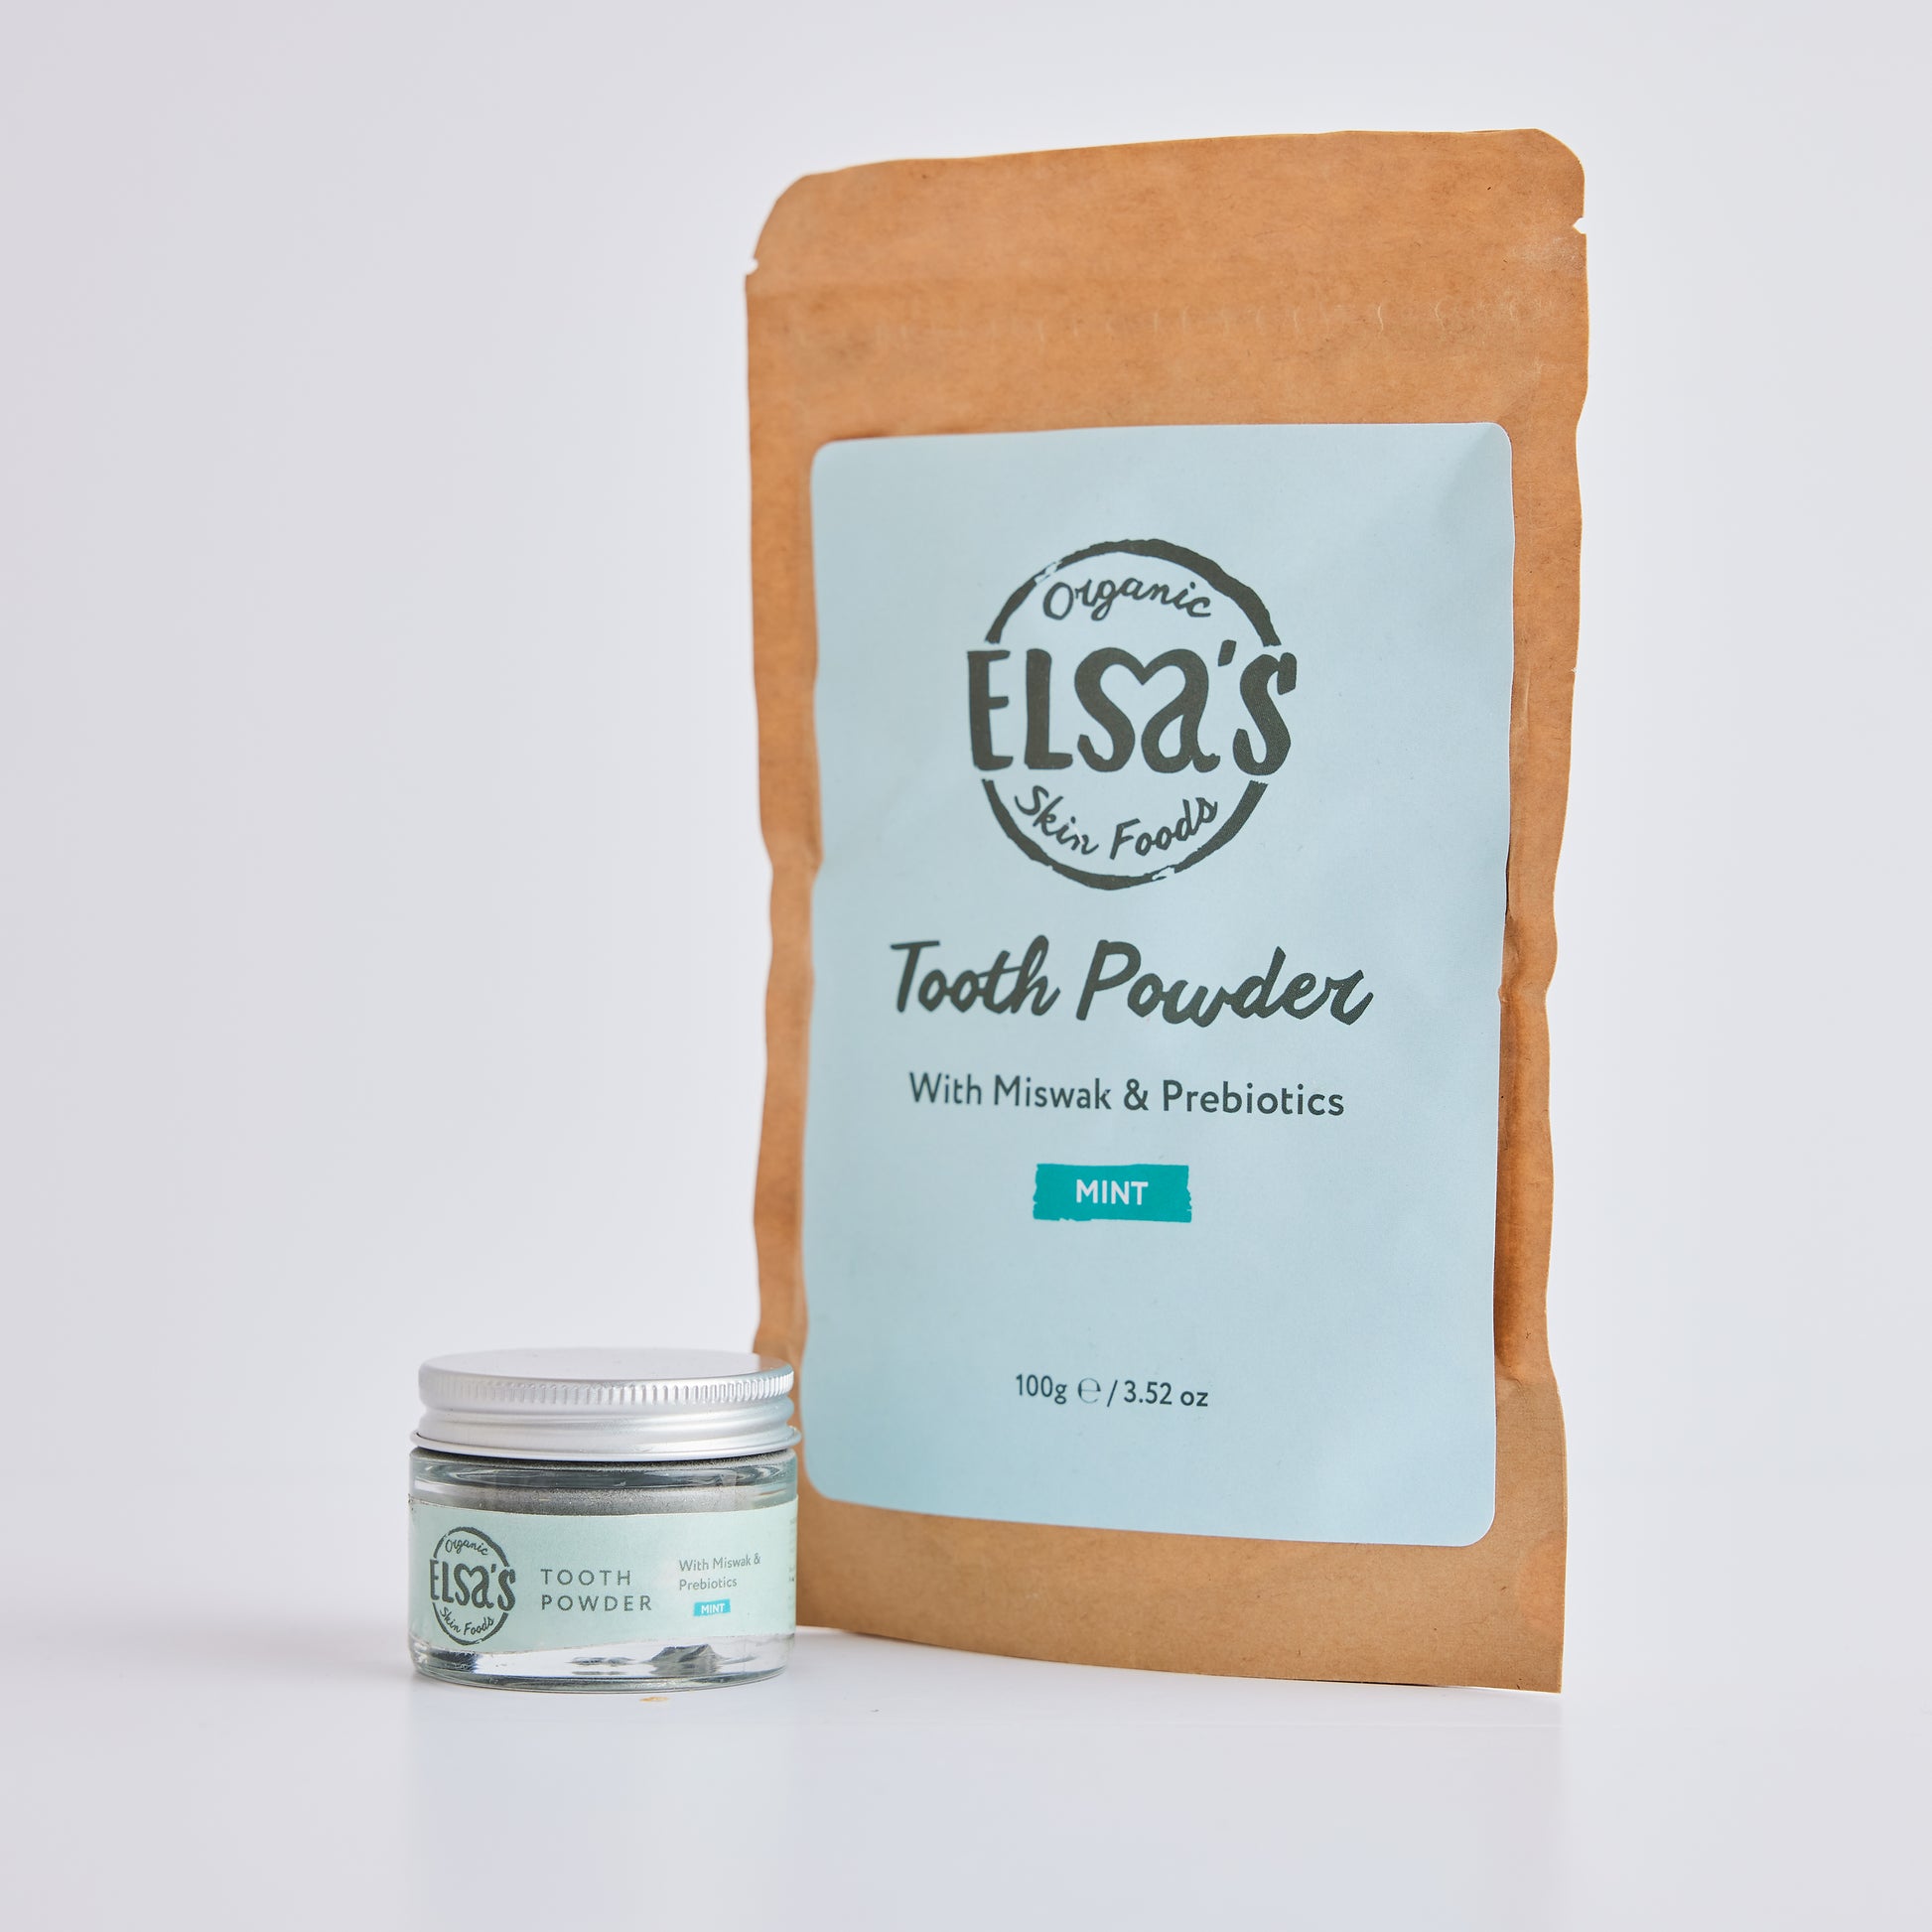 Elsa's Organic Skinfoods Tooth Powder Refill Pack & Refill Pack